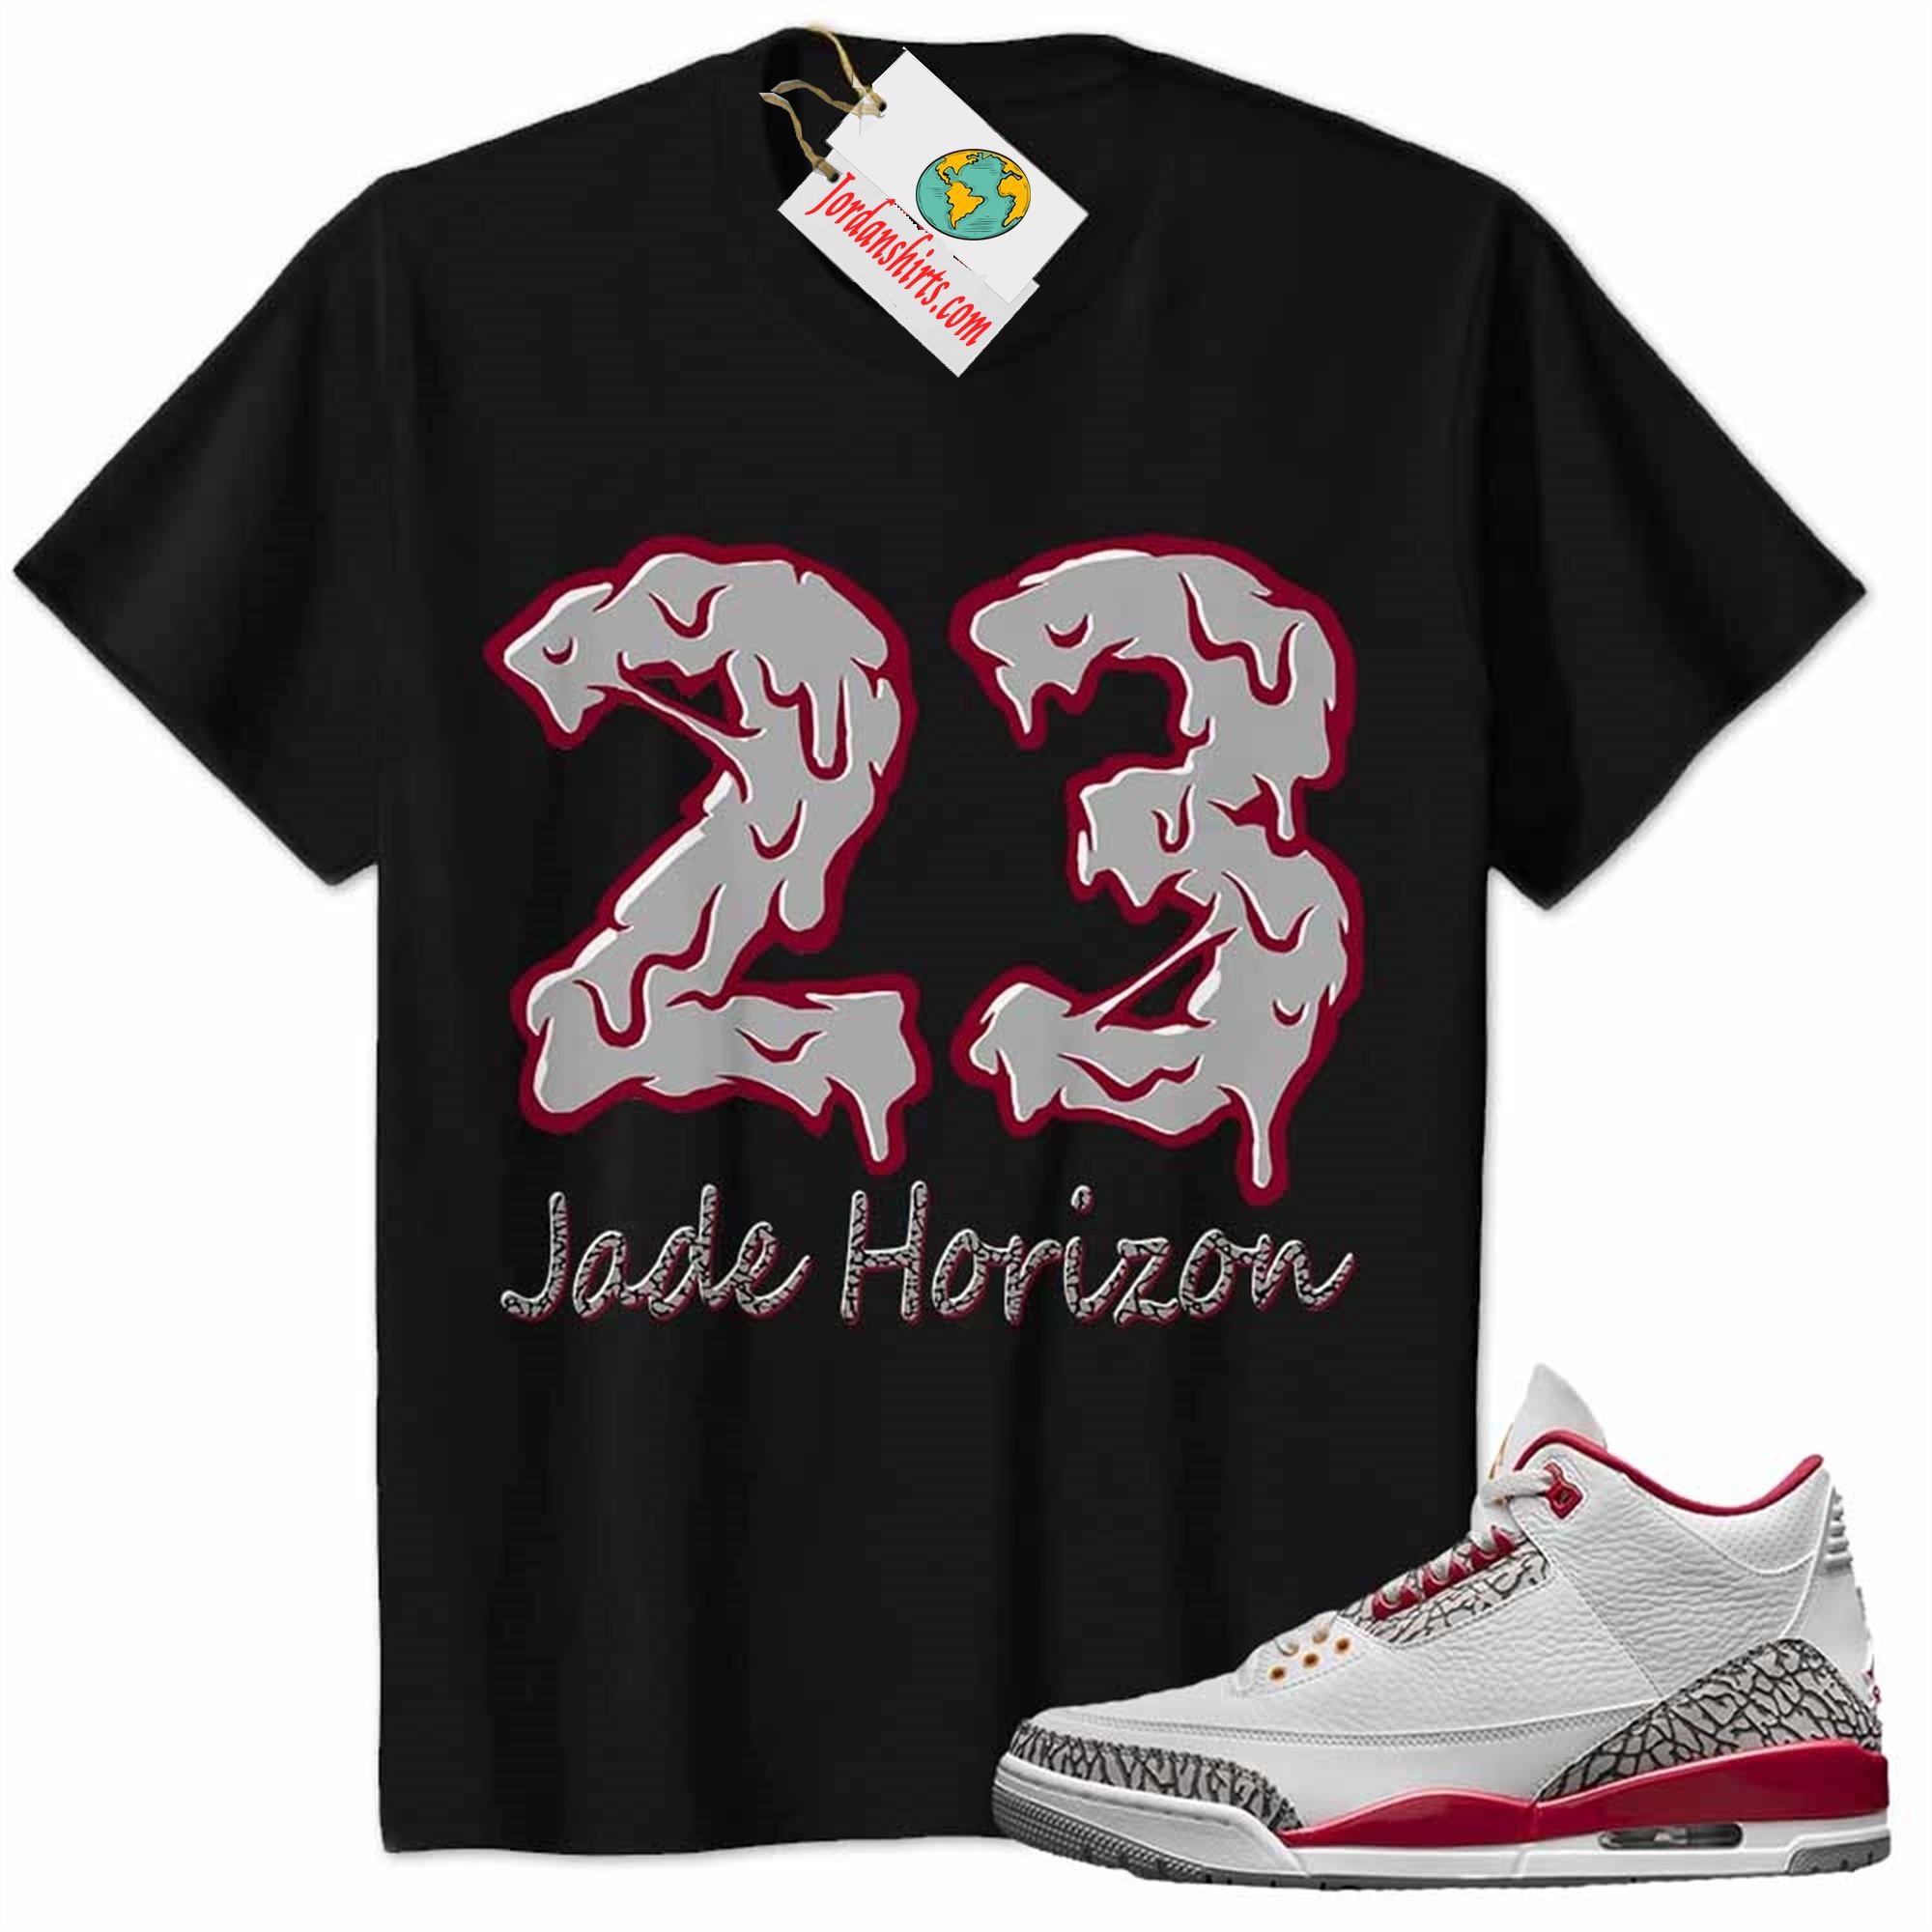 Jordan 3 Shirt, Number 23 Jordan Dripping Black Air Jordan 3 Cardinal Red 3s Full Size Up To 5xl